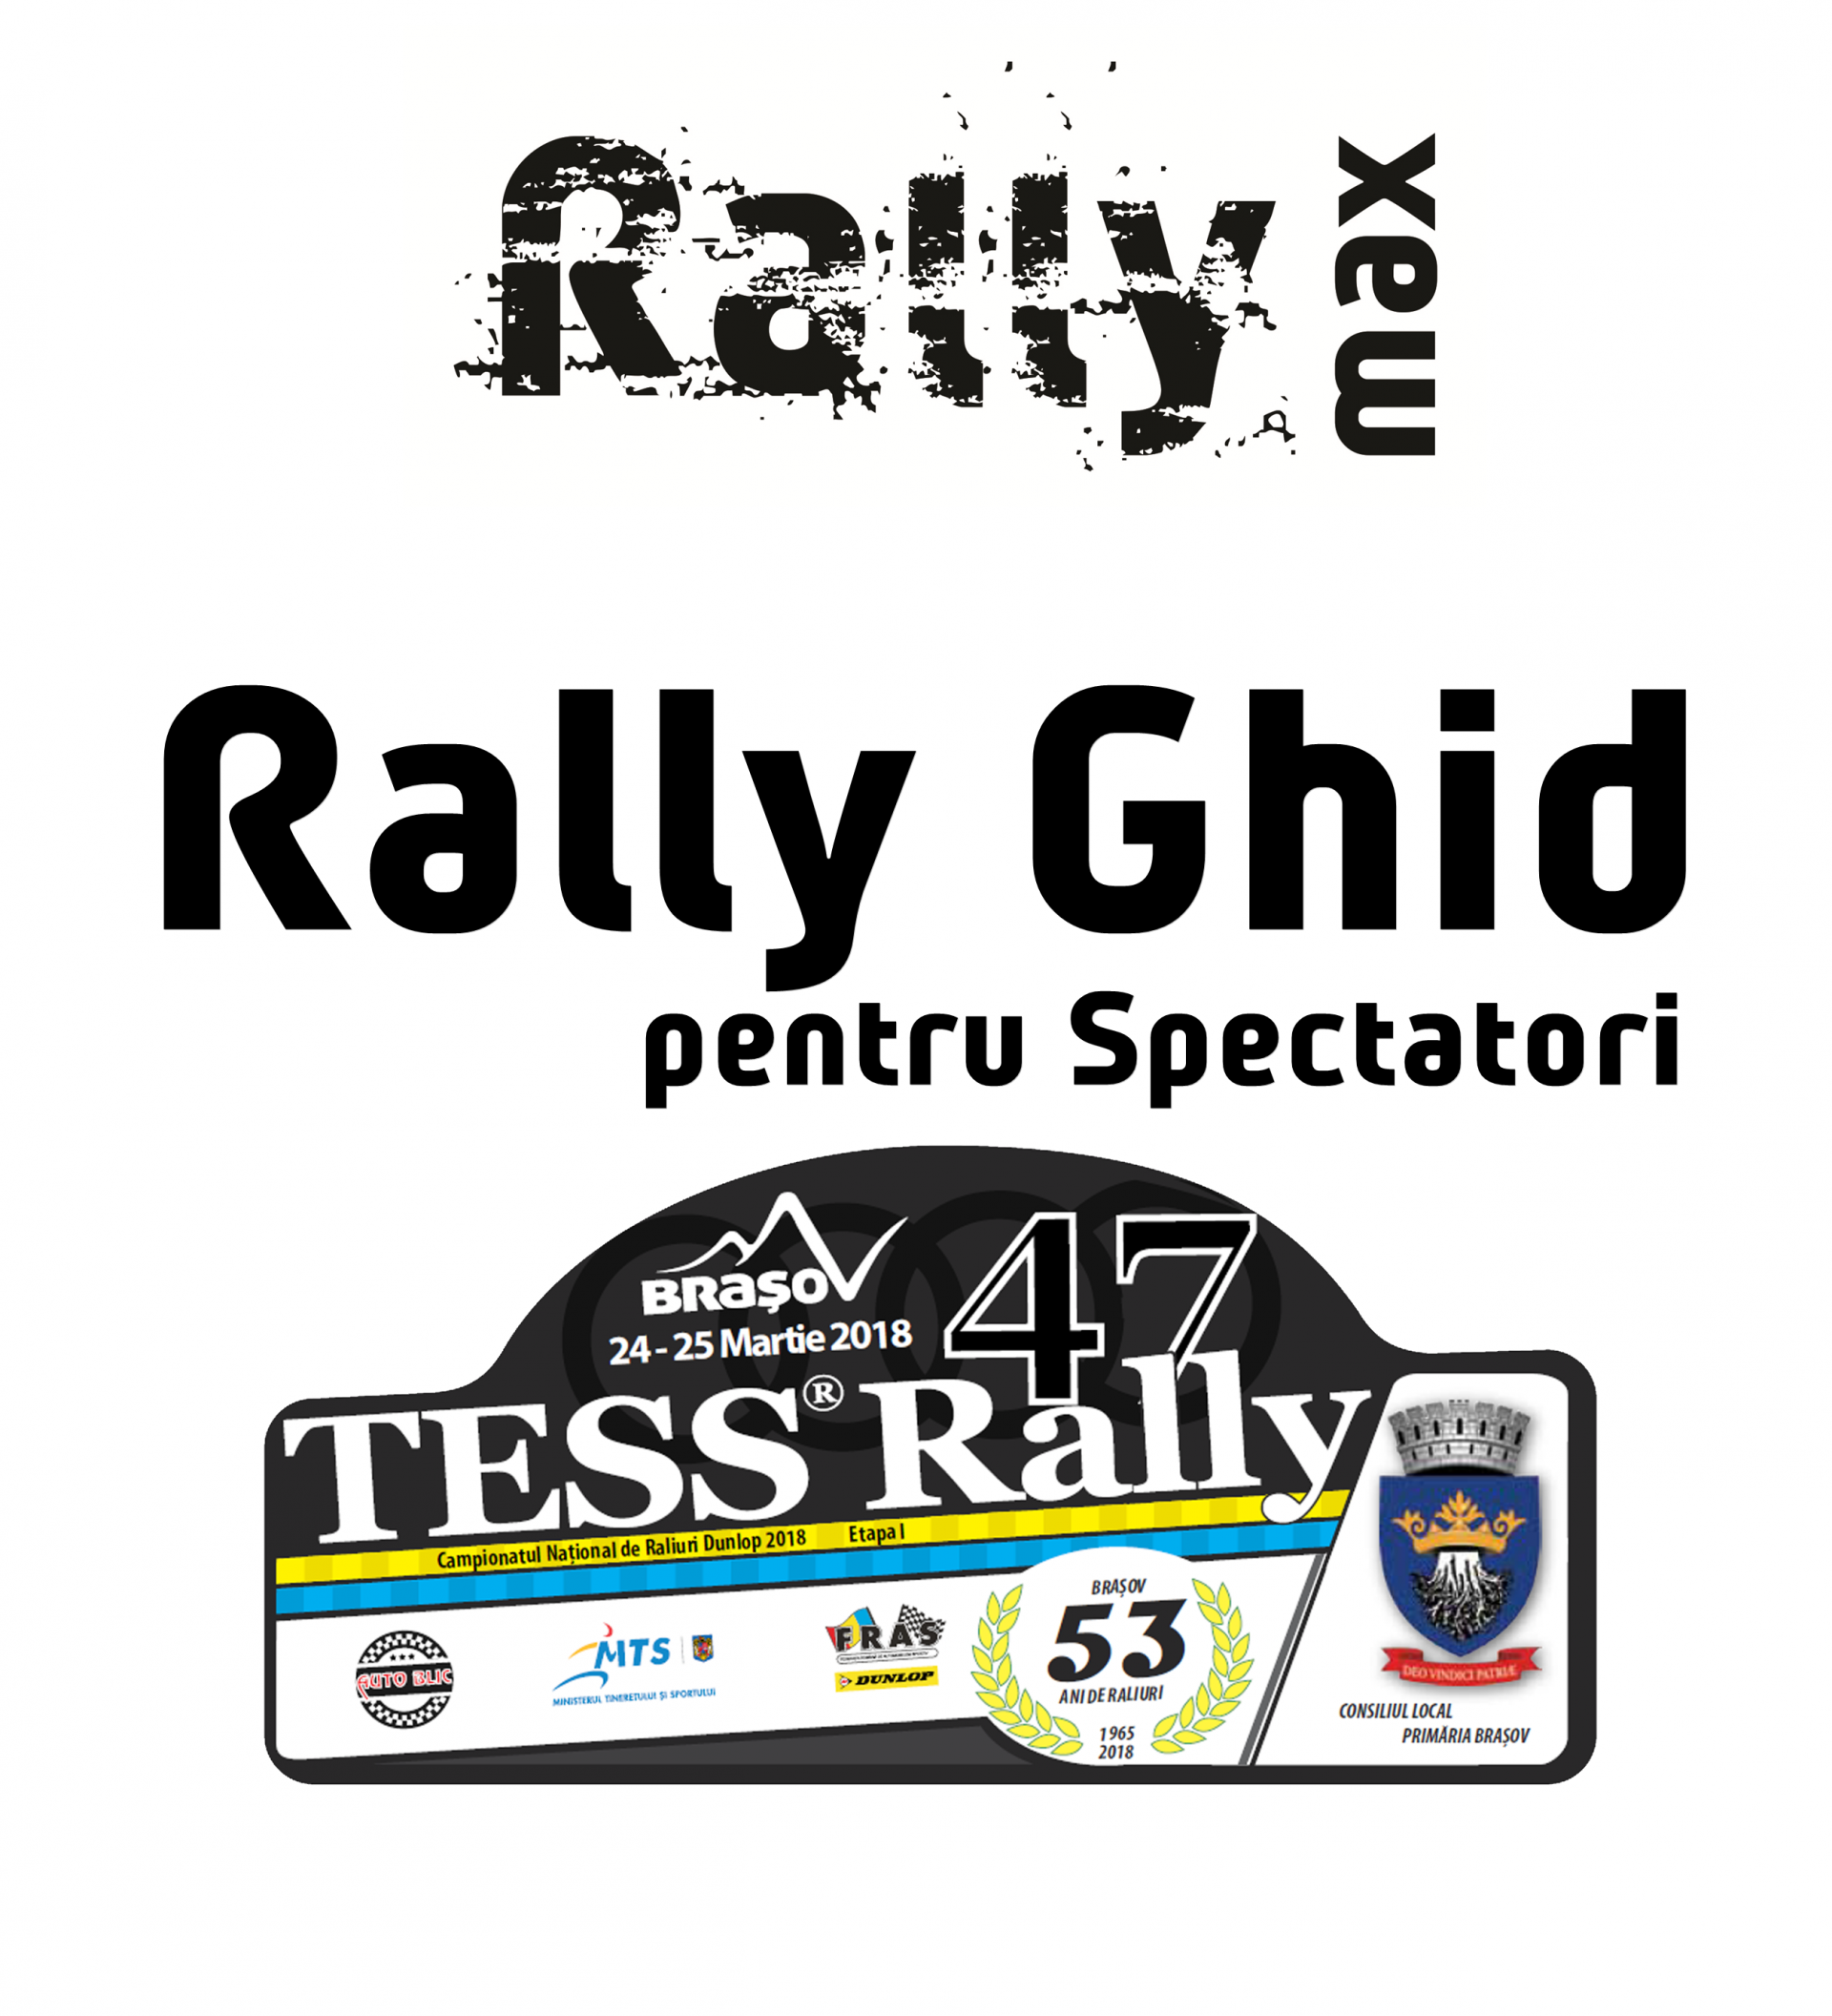 Tess Rally 2018 – Rally Ghid pentru spectatori